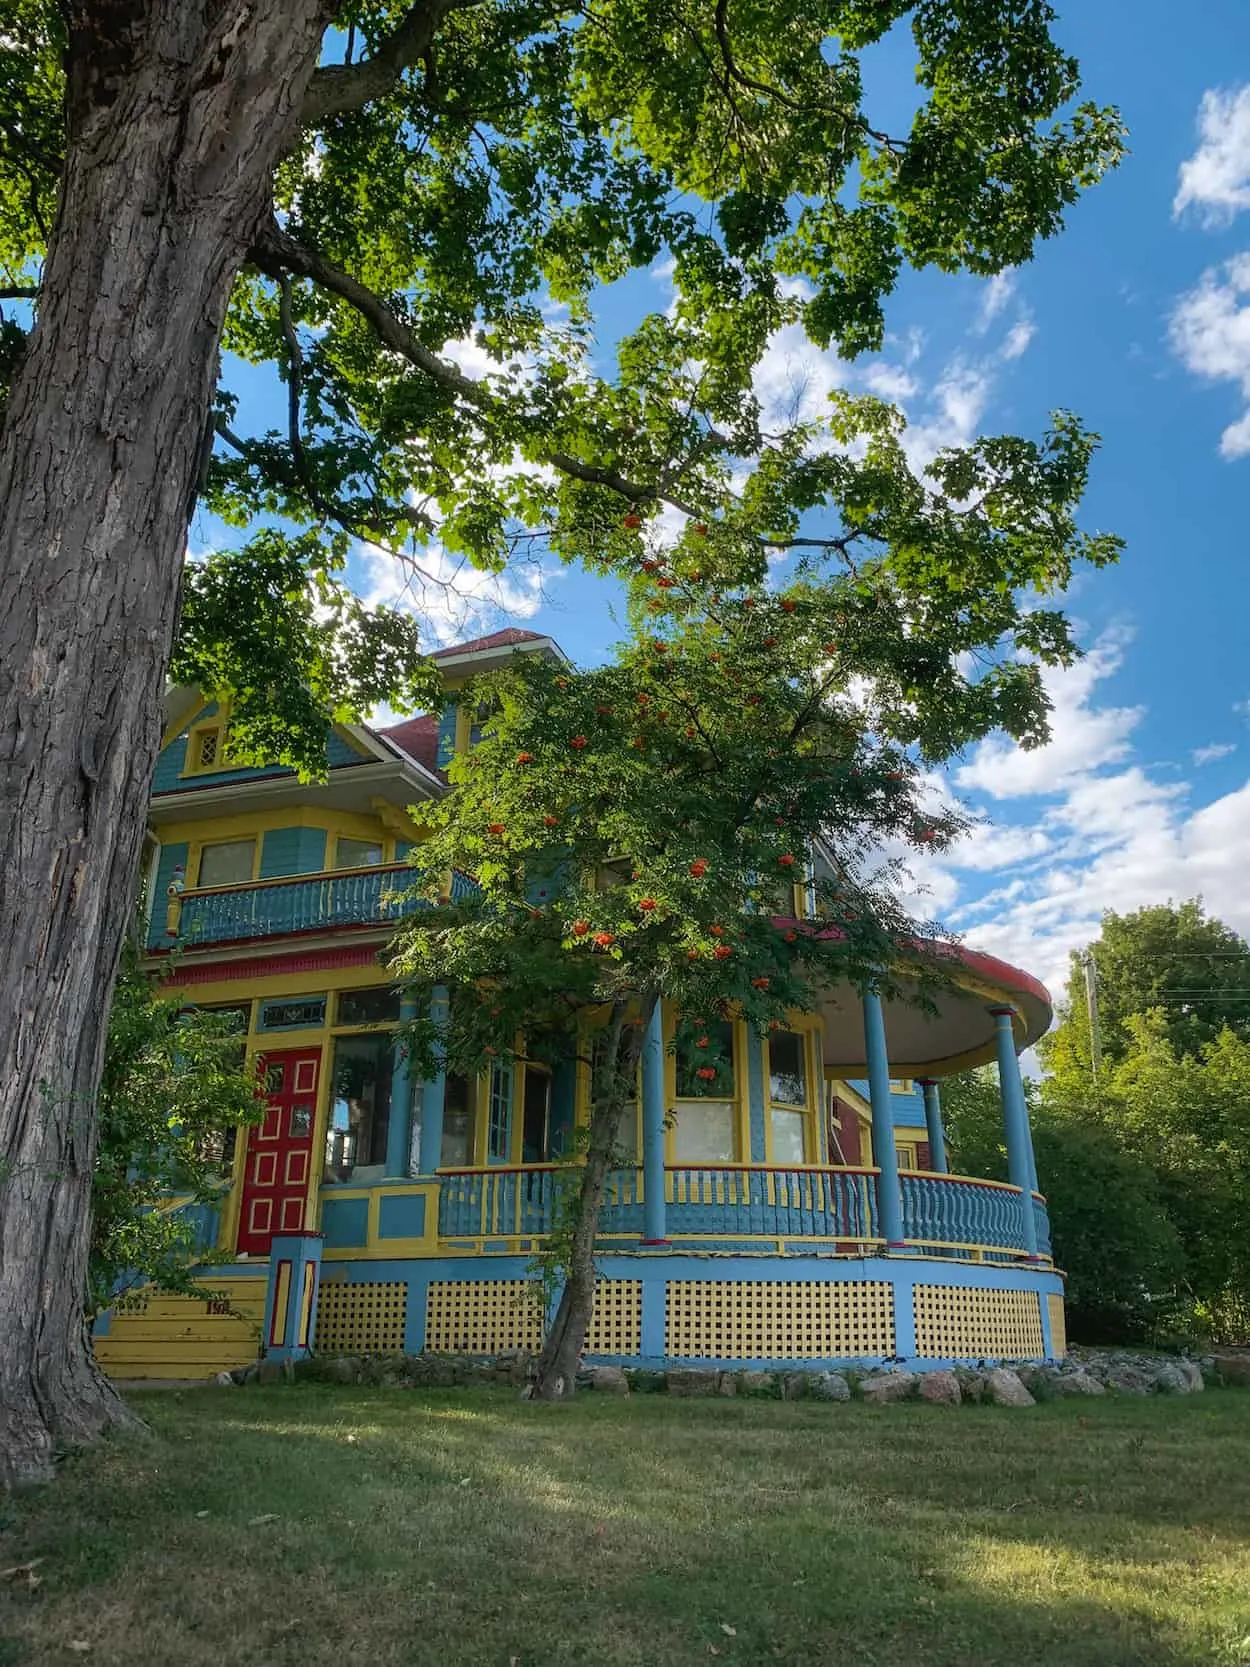 Colourful house in Gananoque, Ontario